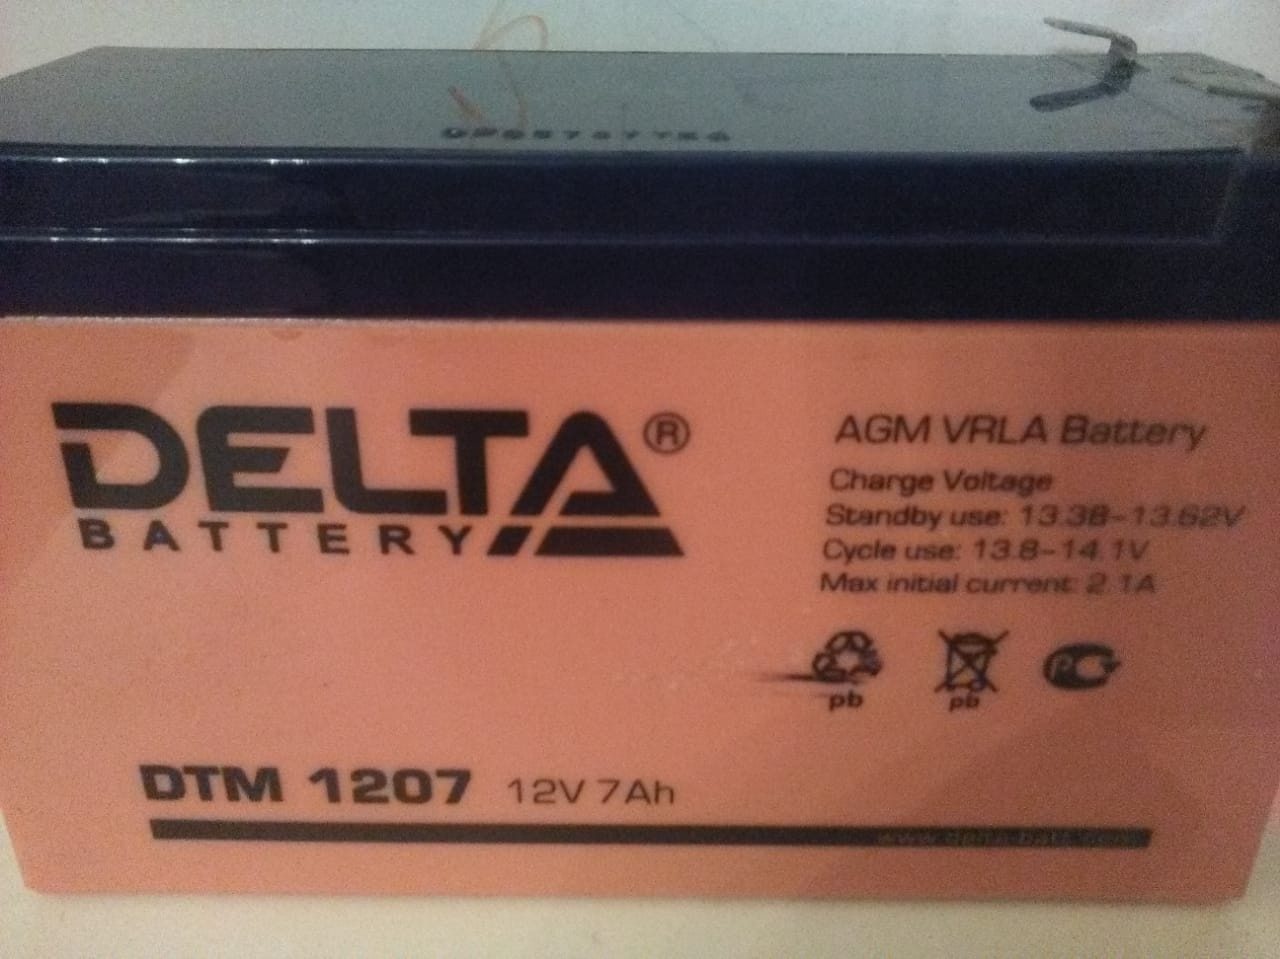 Battery 12v 7ah. Аккумуляторная батарея Delta DT 12100 (12v / 100ah). Дельта аккумулятор 12v 7ah. Батарея Delta DT 1207 (12v, 7ah) <DT 1207>. Delta DTM 1207 12v.